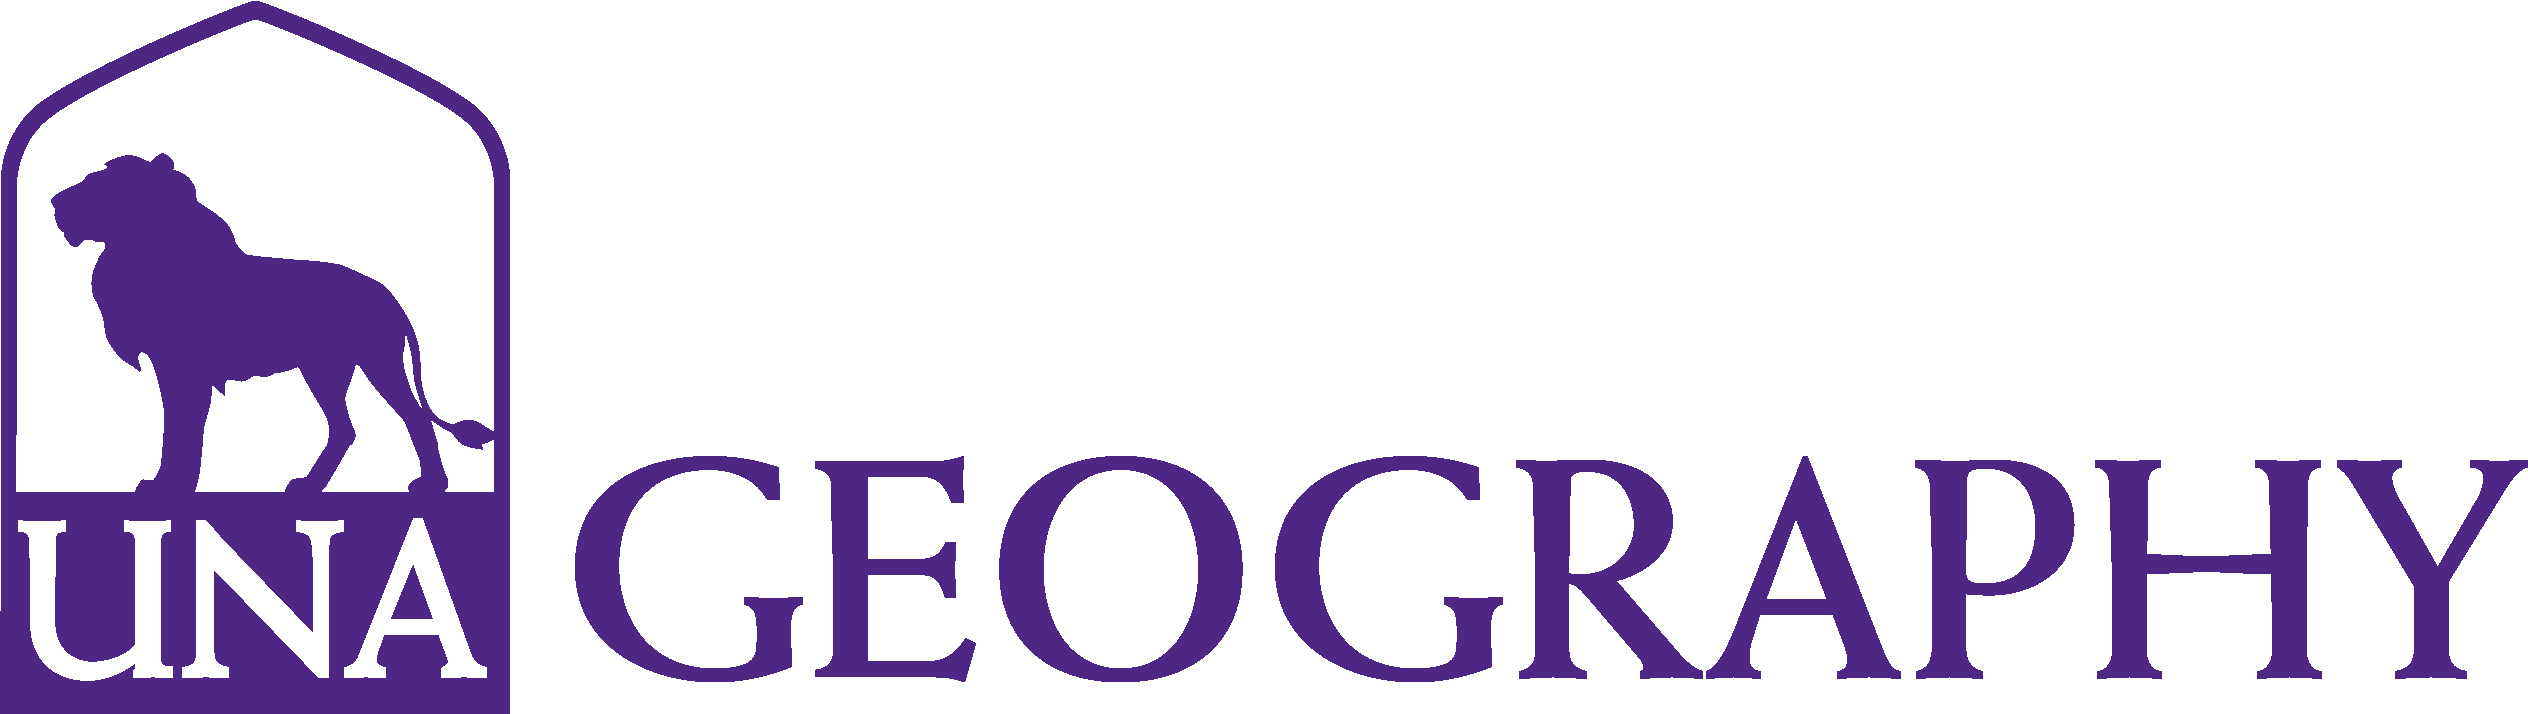 Geography logo 3